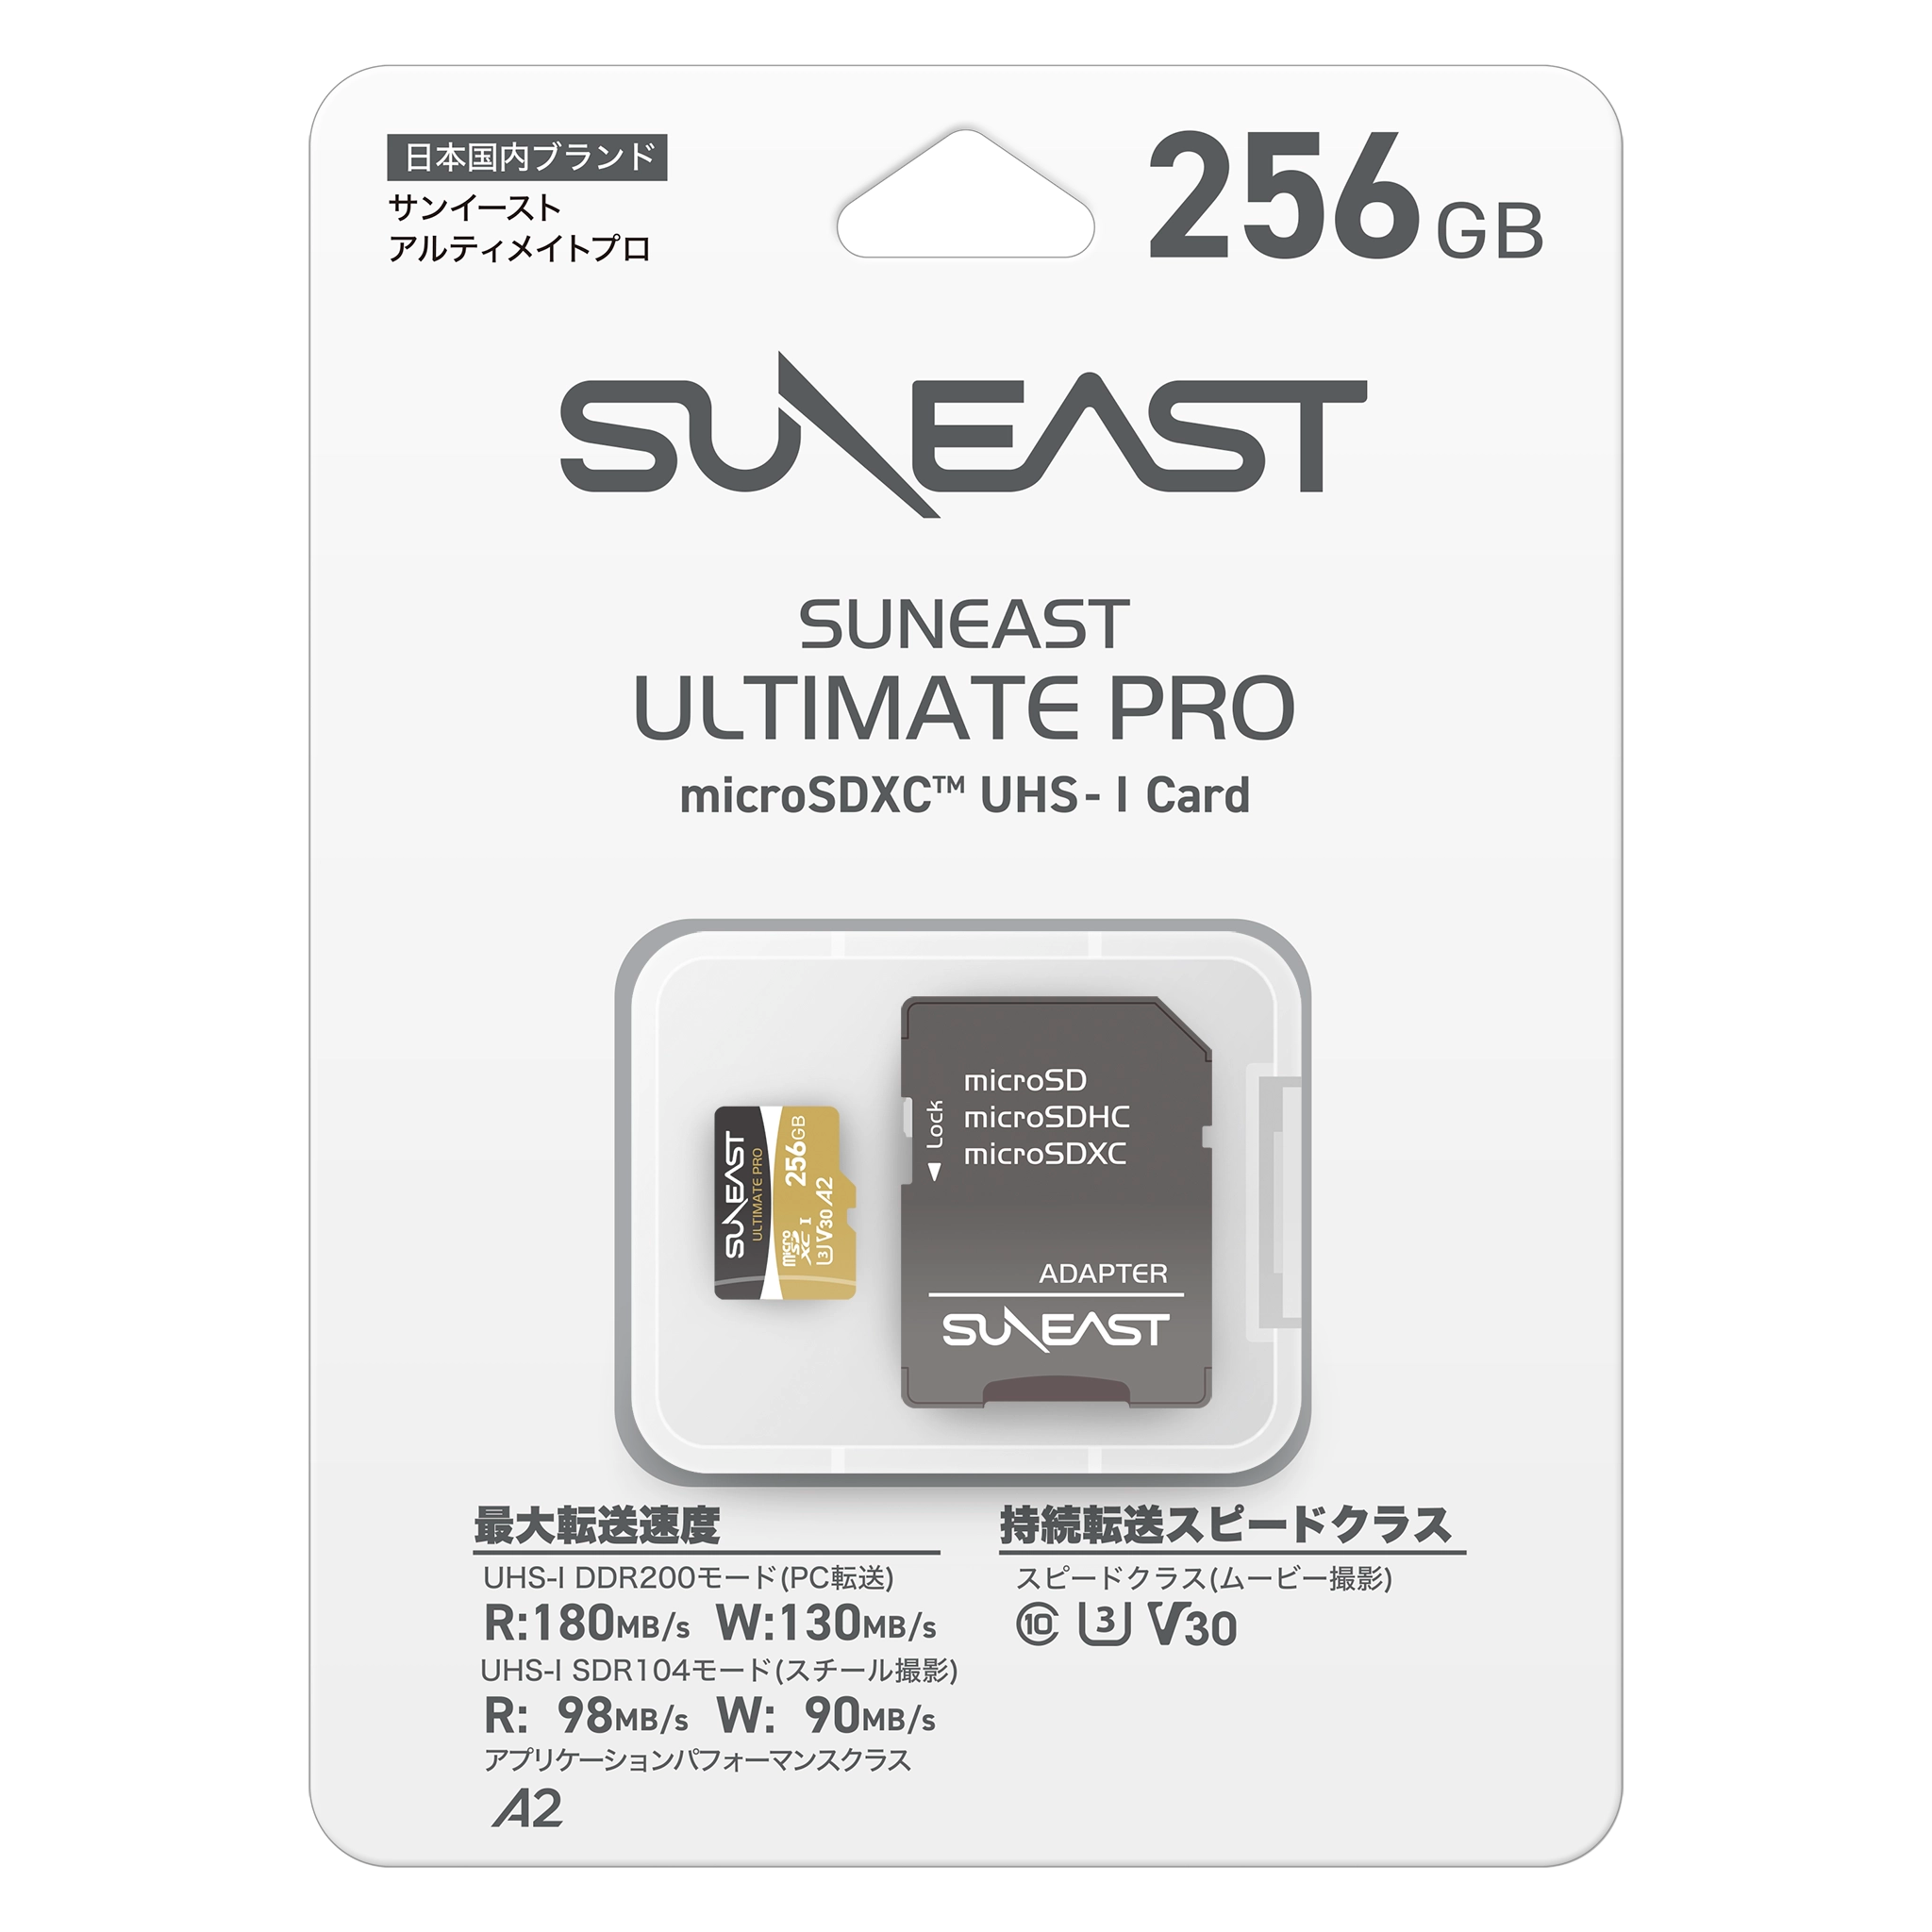 ULTIMATE PRO microSDXC【GOLD】ホワイトパッケージ版 256GB - SUNEAST online store